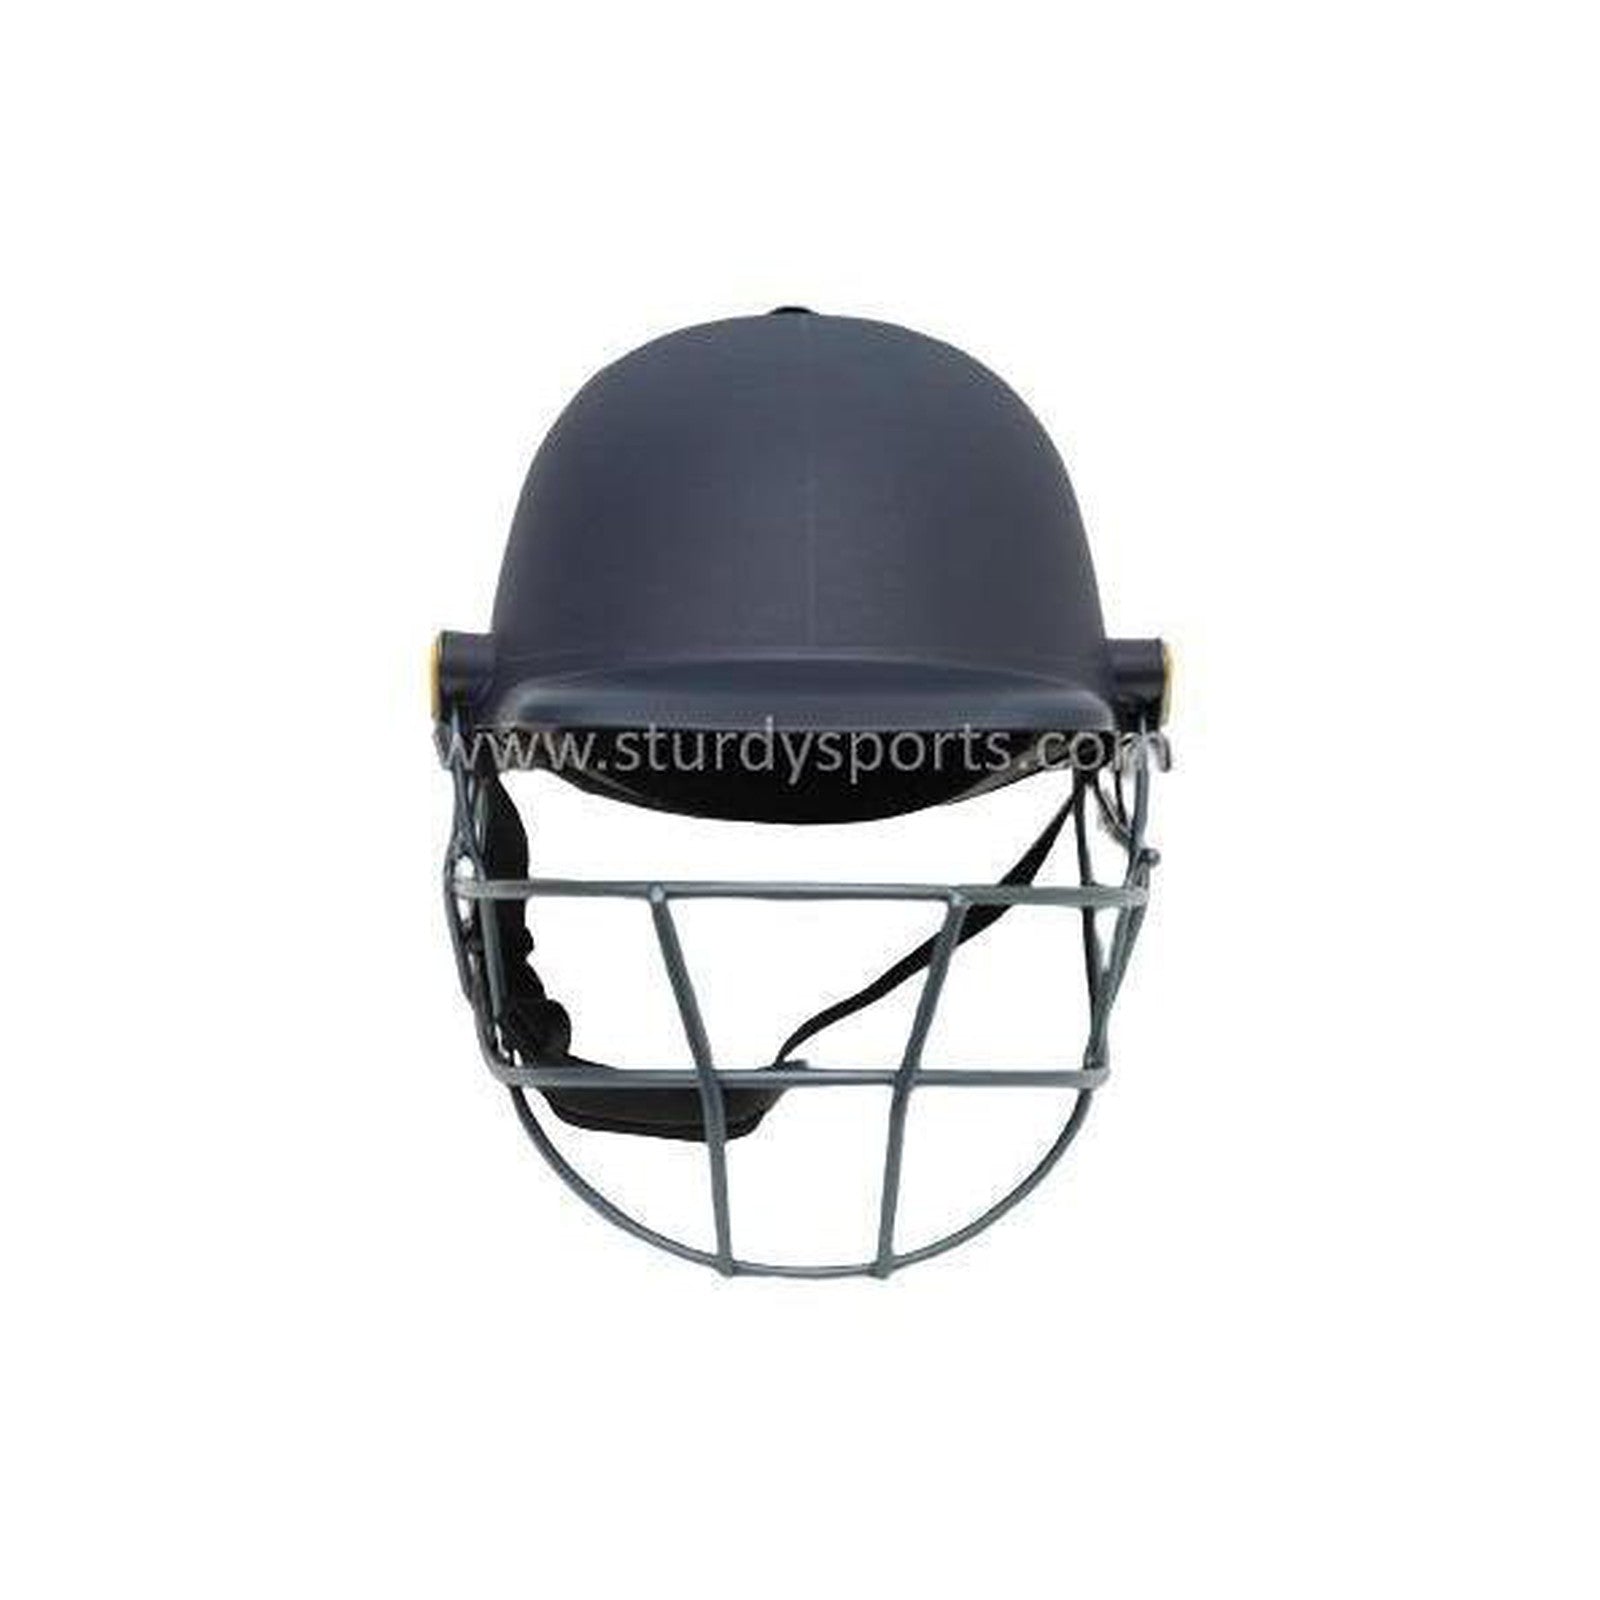 Masuri C Line Cricket Helmet without Adjuster - Senior